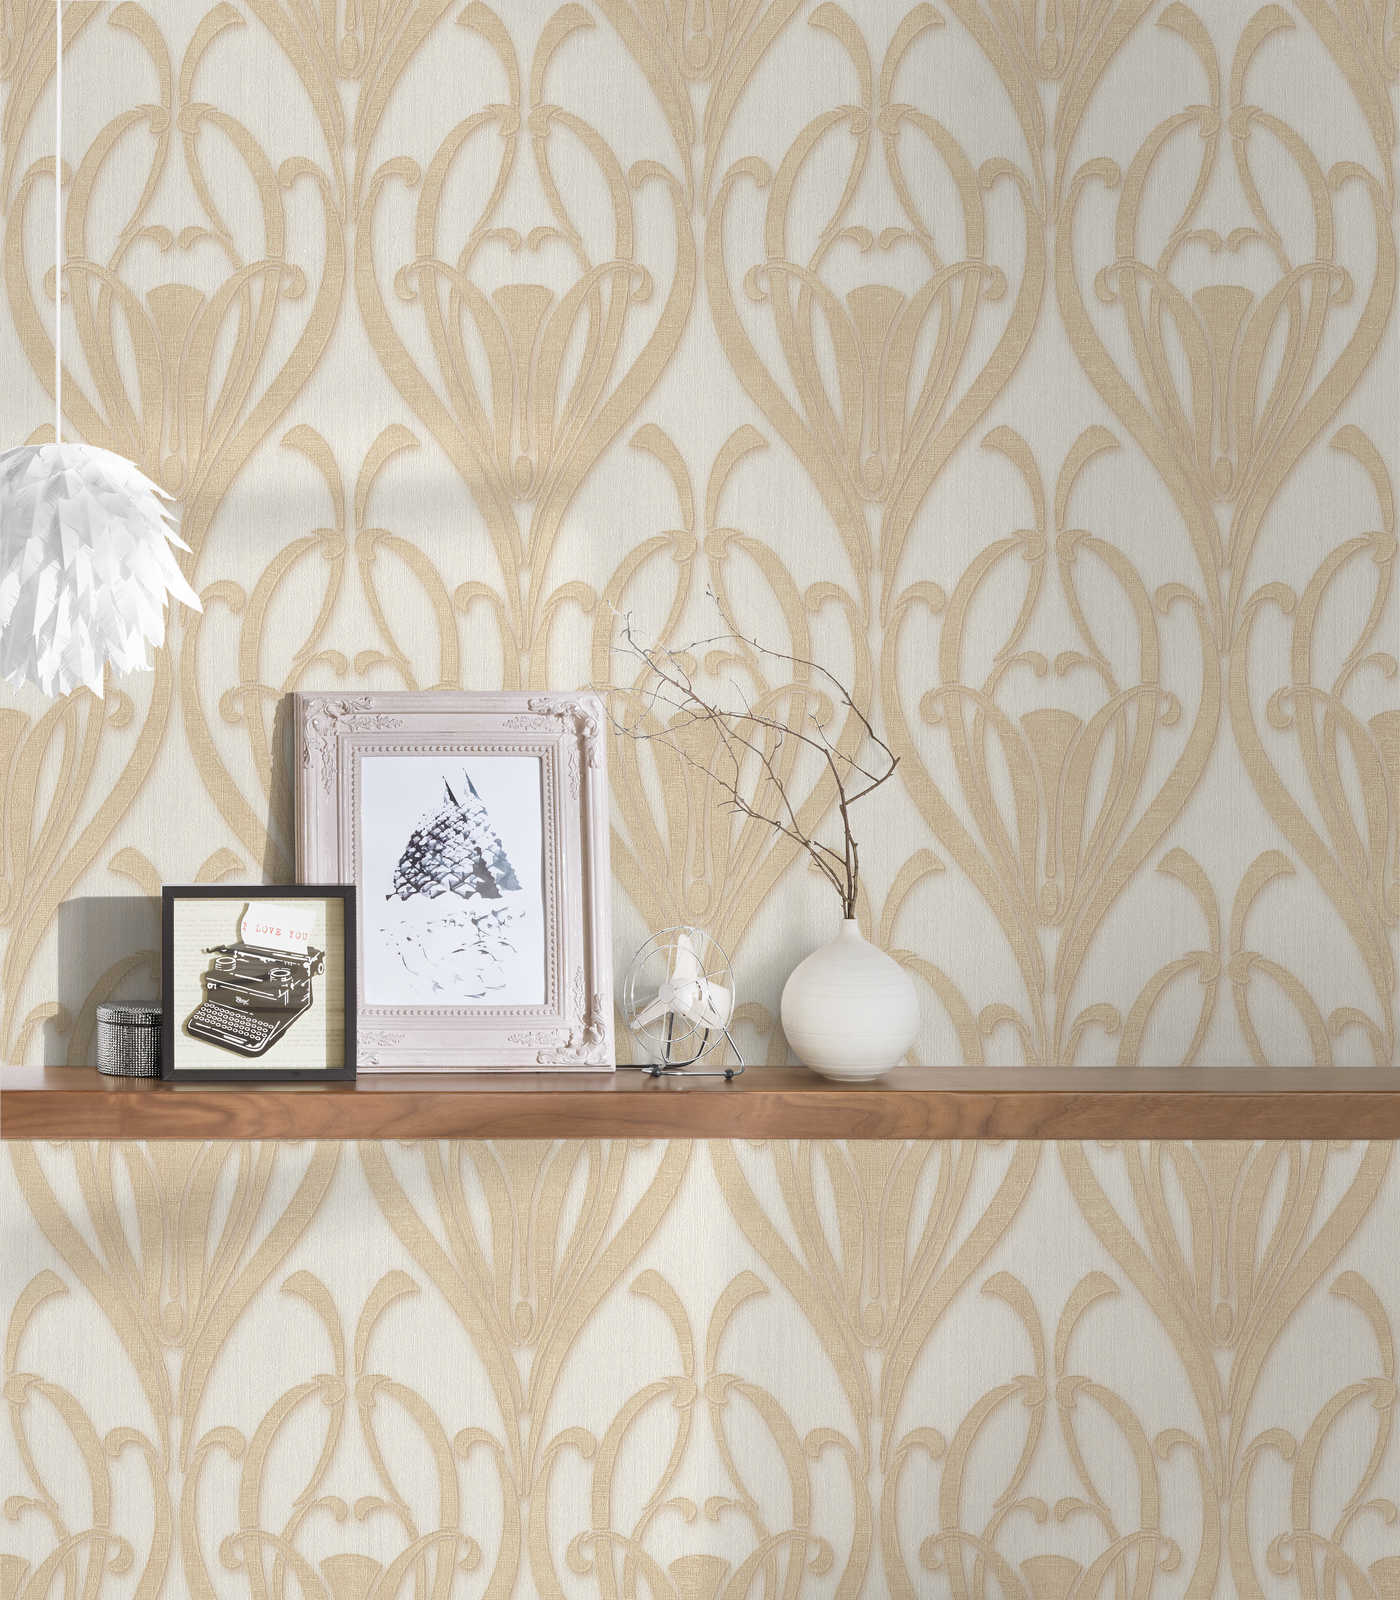             Art Deco wallpaper with golden pattern & textile texture
        